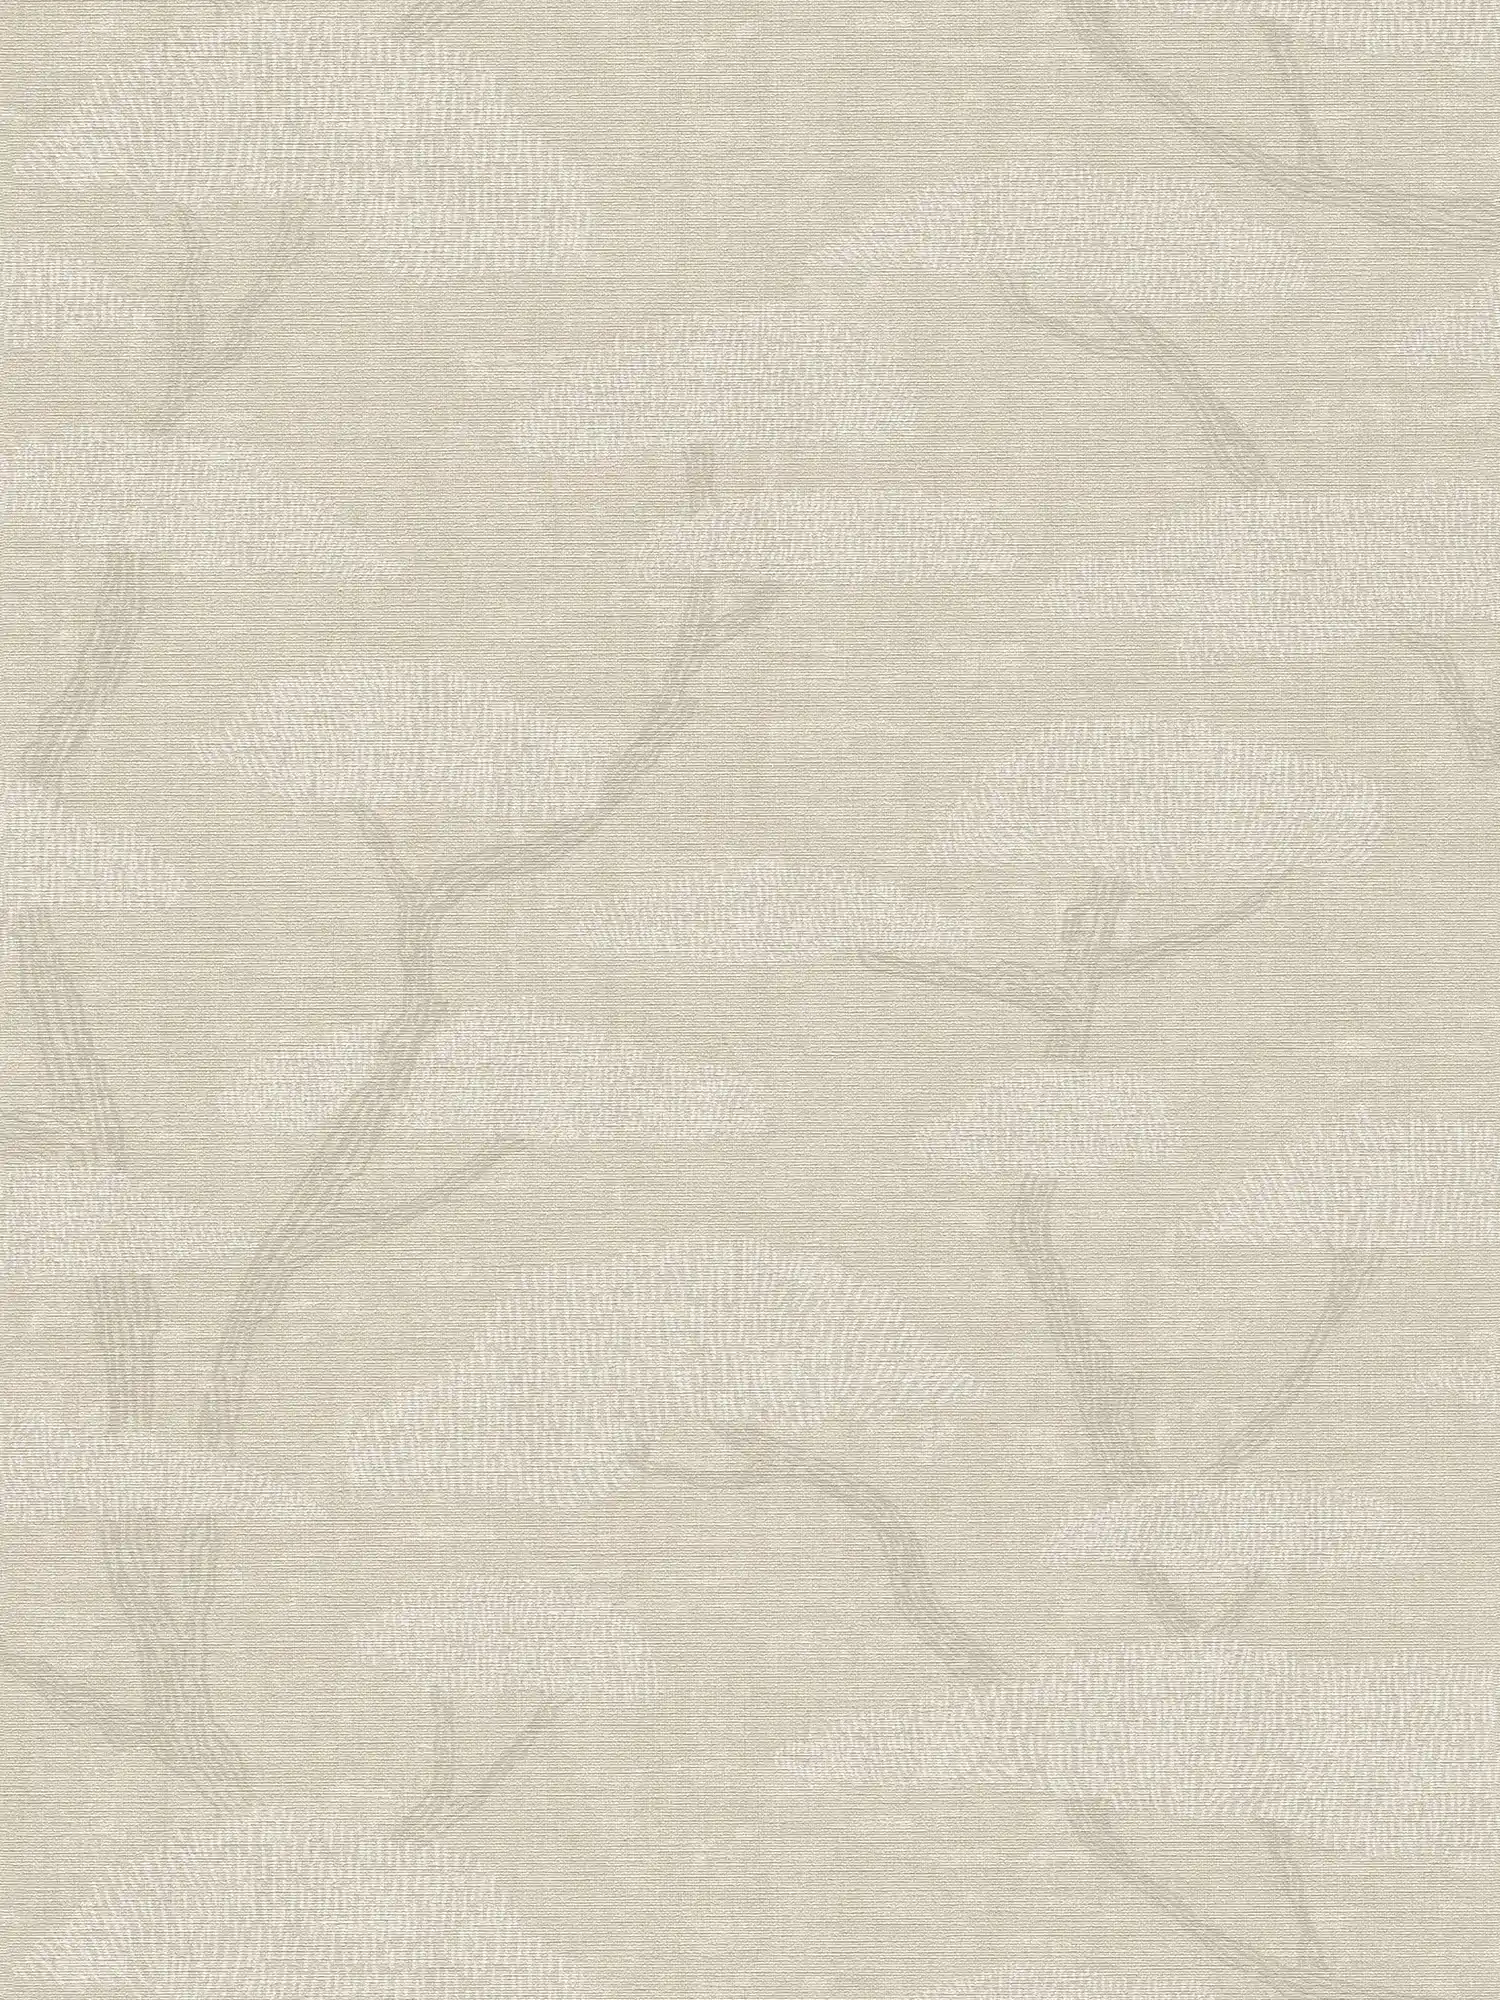         Vliesbehang dennenbos in retrolook - beige
    